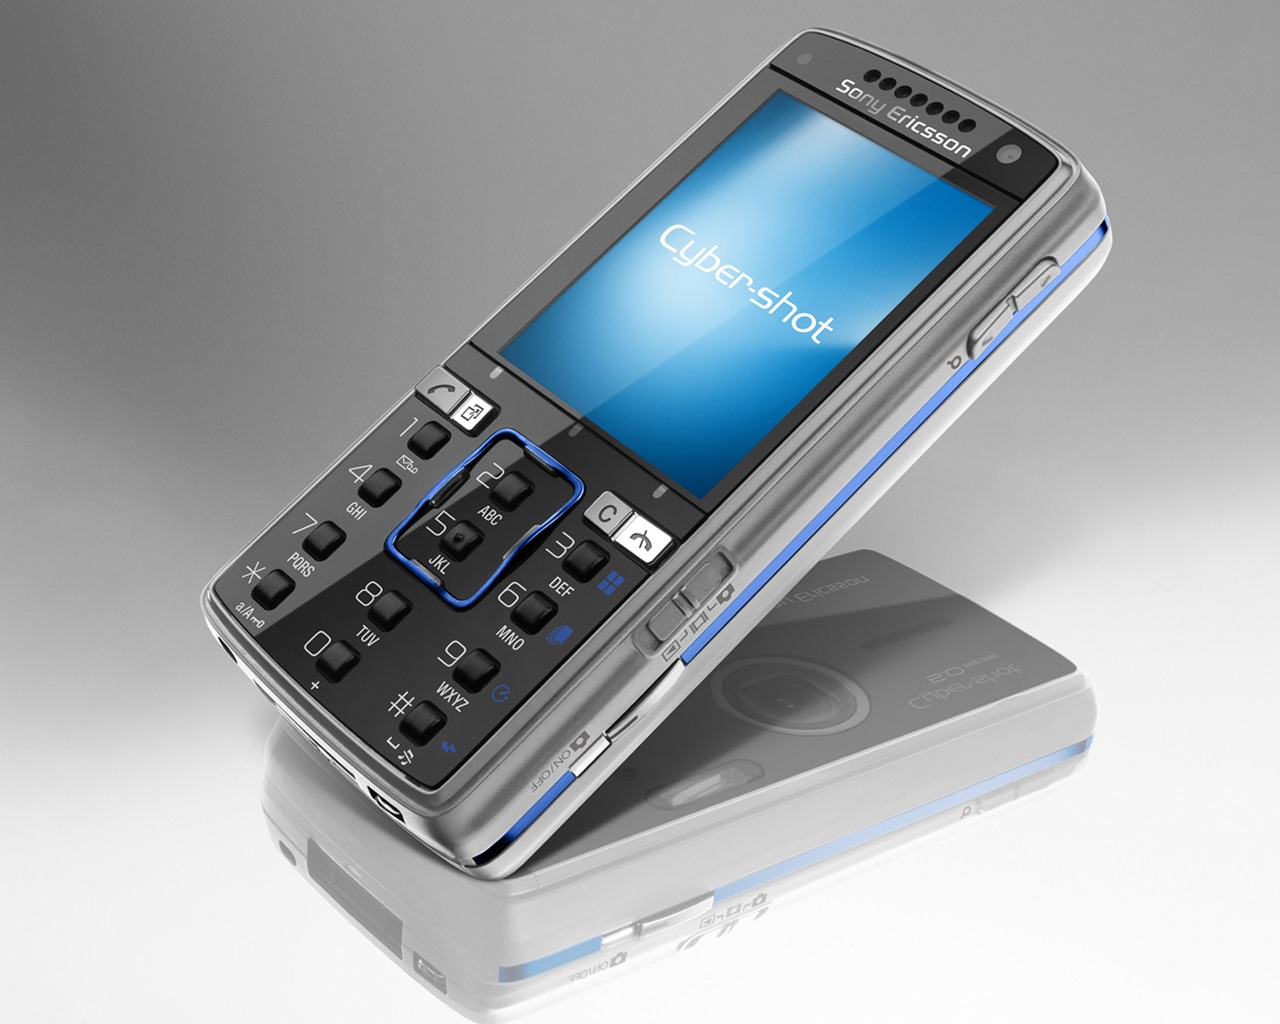 Sony Ericsson K850 for 1280 x 1024 resolution